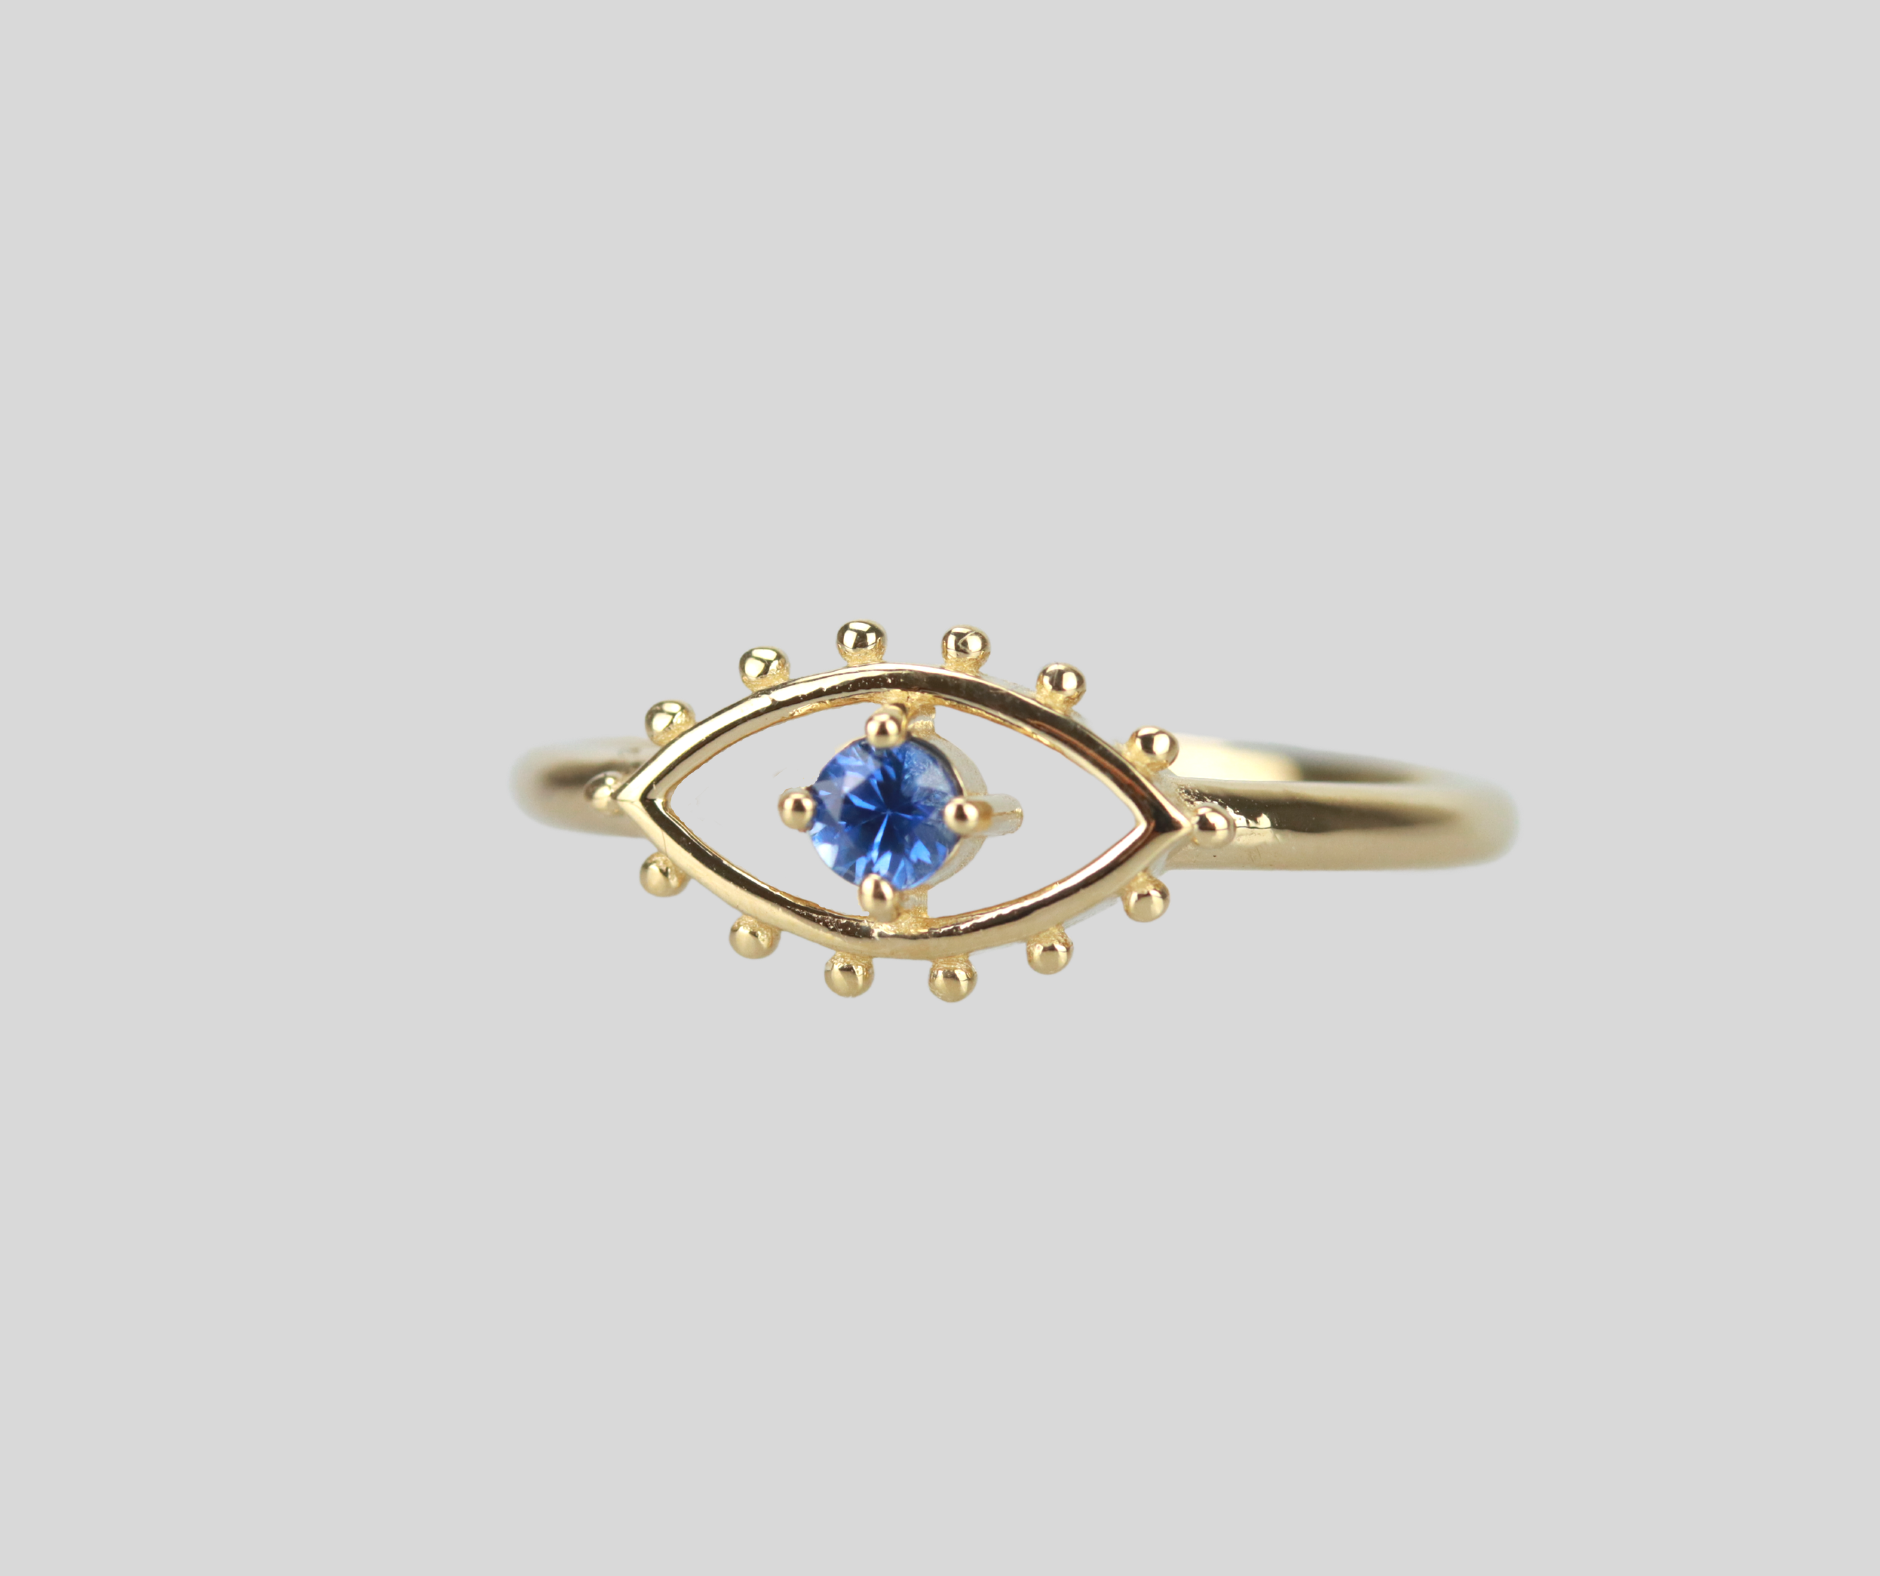 Solid 14k Gold Prosperity Eye Ring in Ble Sapphire